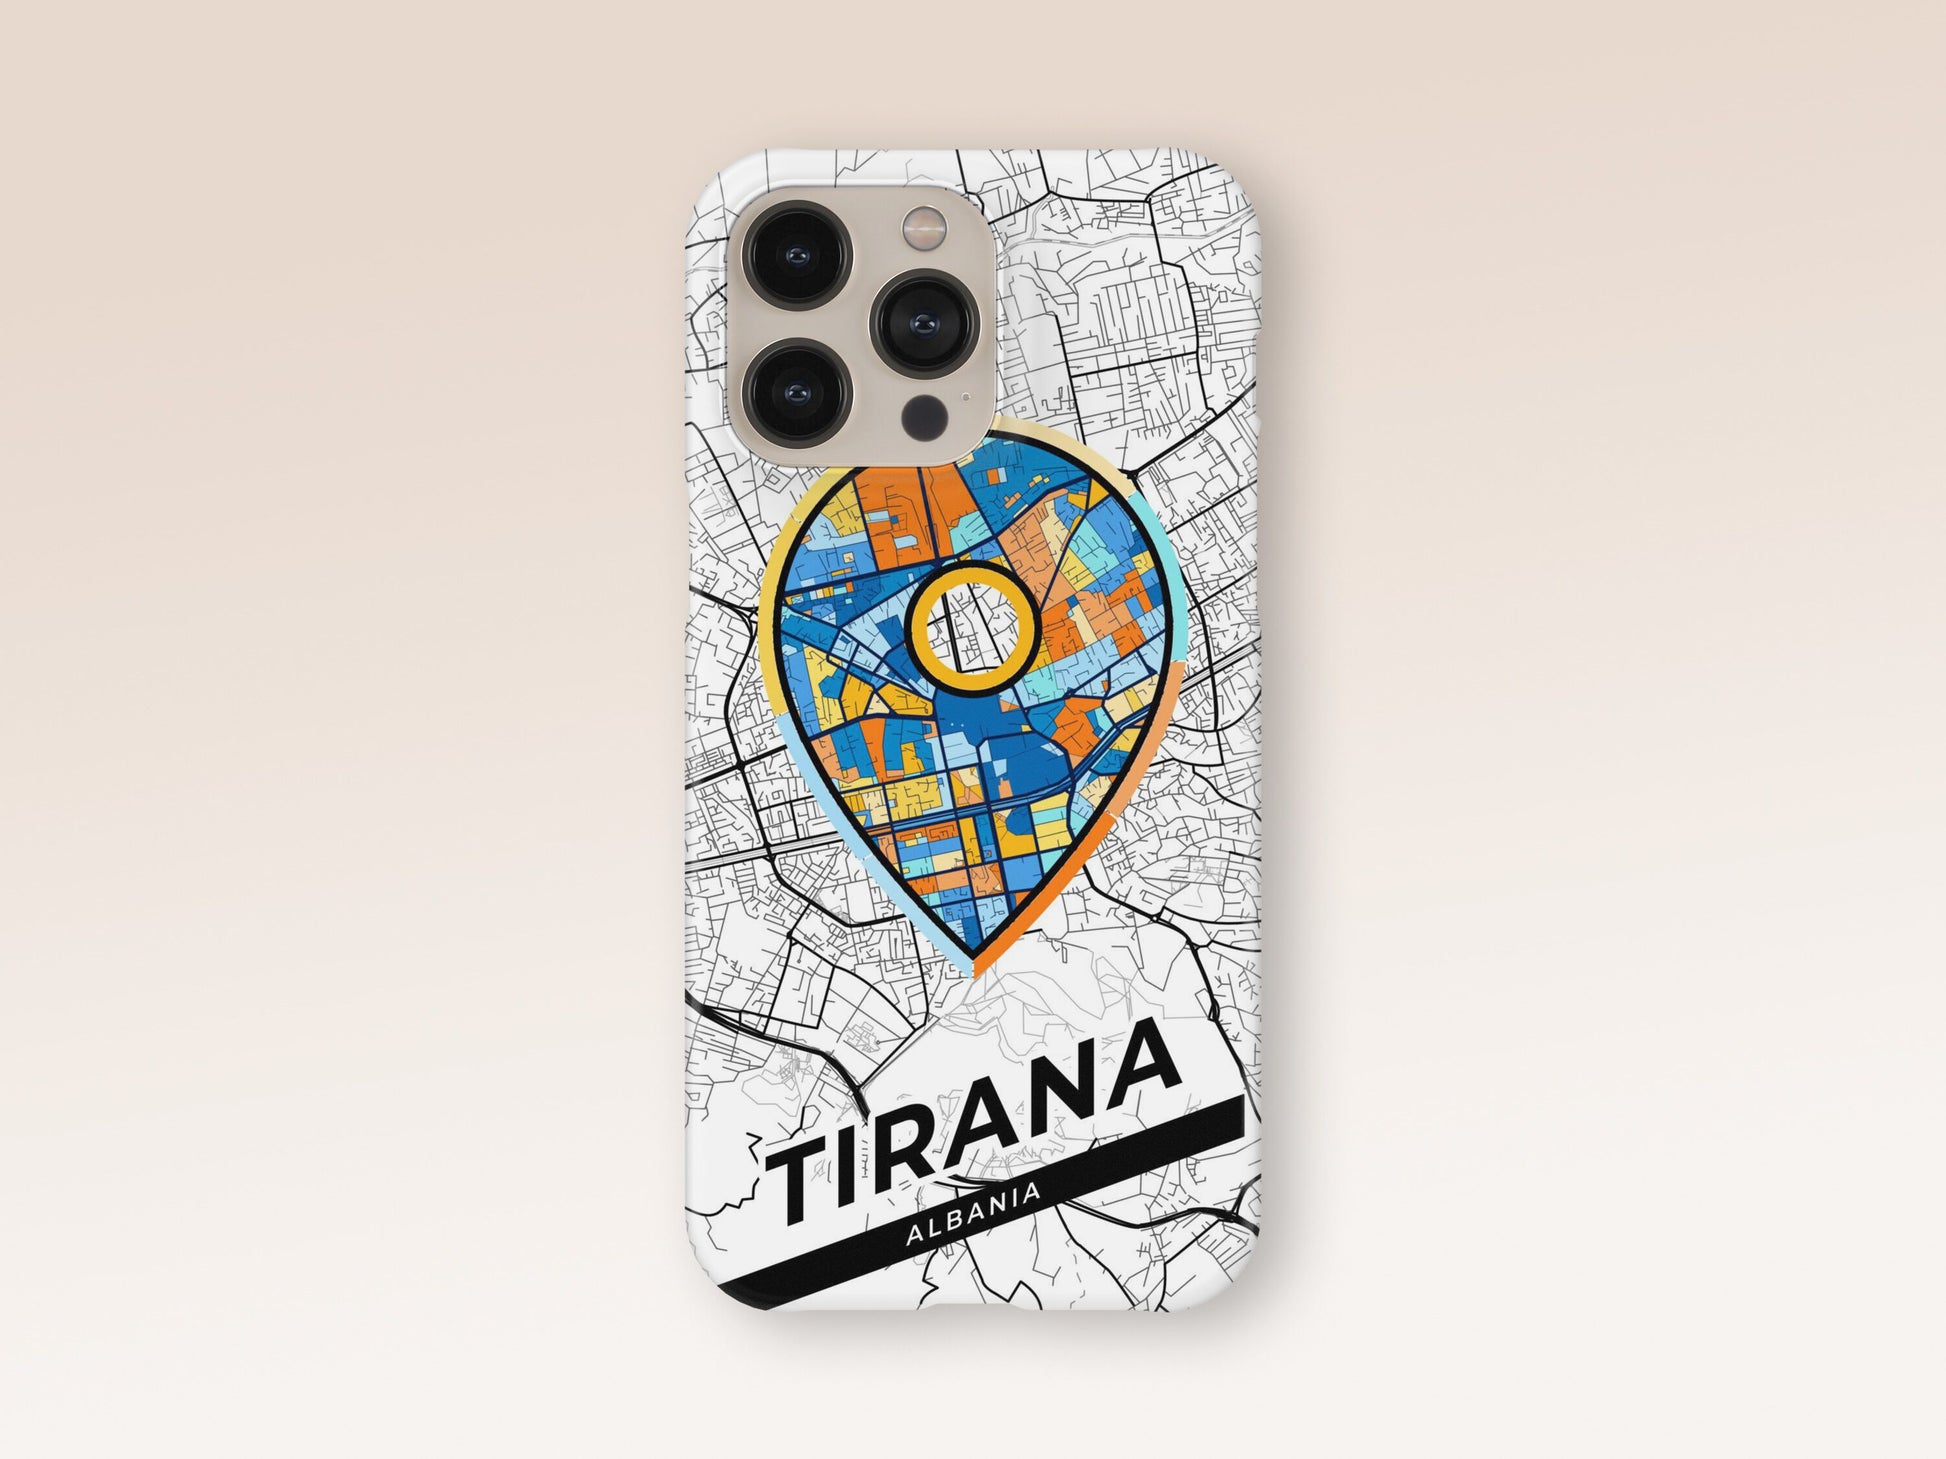 Tirana Albania slim phone case with colorful icon. Birthday, wedding or housewarming gift. Couple match cases. 1